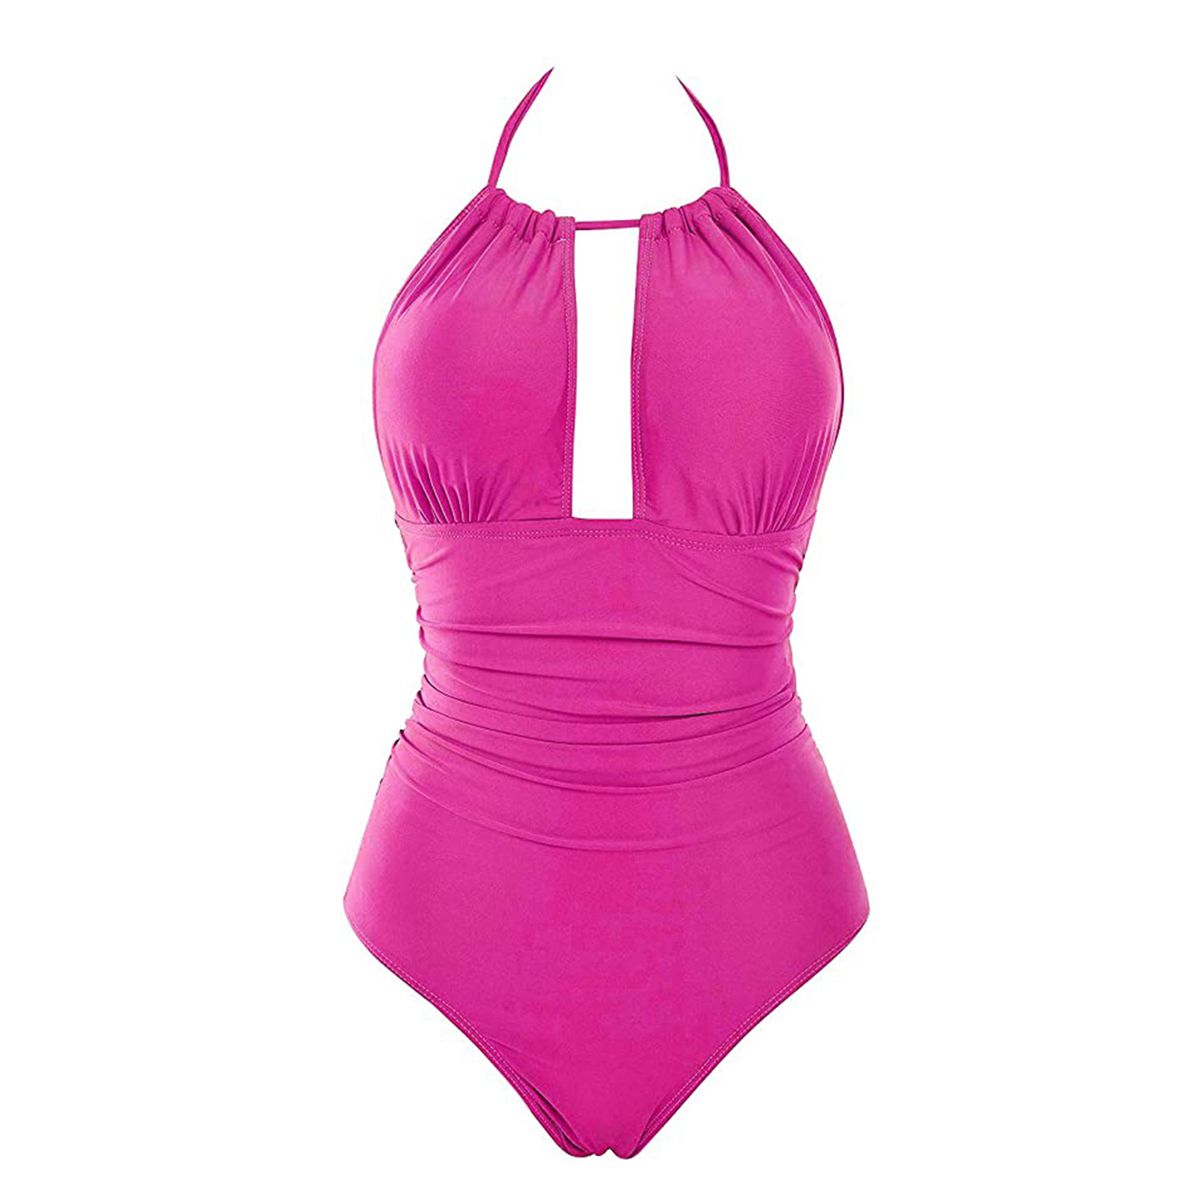 B2prity Women's One Piece Swimsuit in Pink